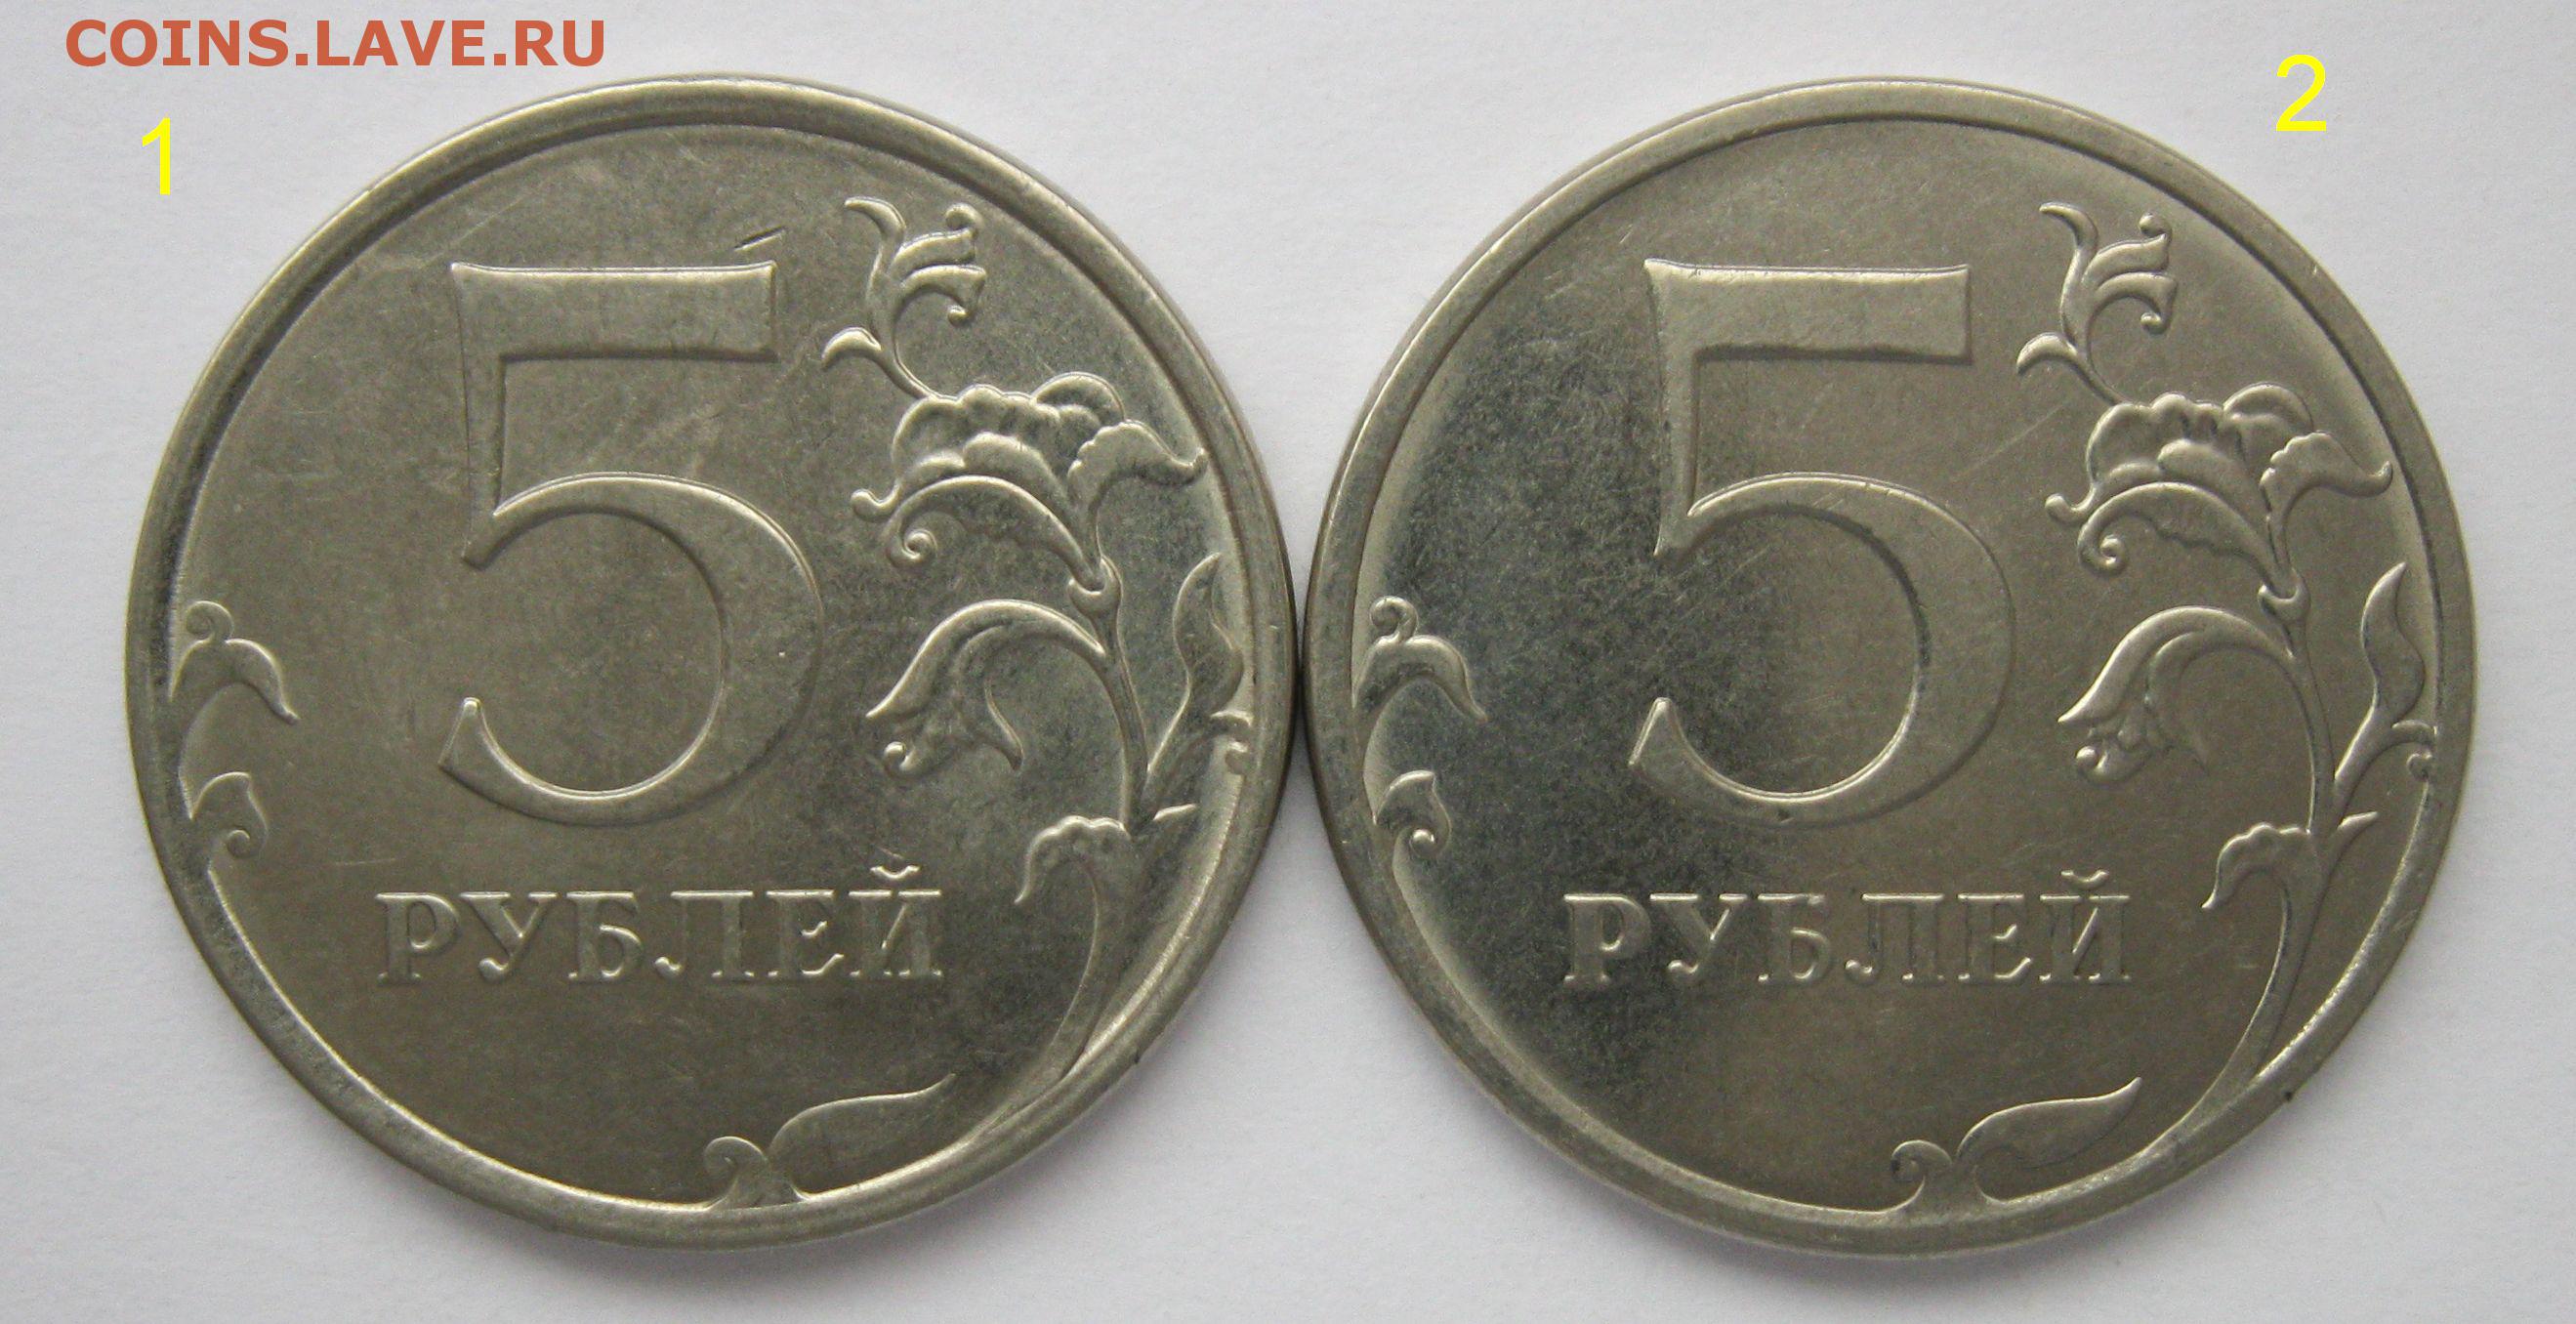 5 рублей 11 года. Монета 5 рублей Аверс. 5 Рублей 2015. 5 Рублей 2016. 5 Рублей 2016 Братислава.